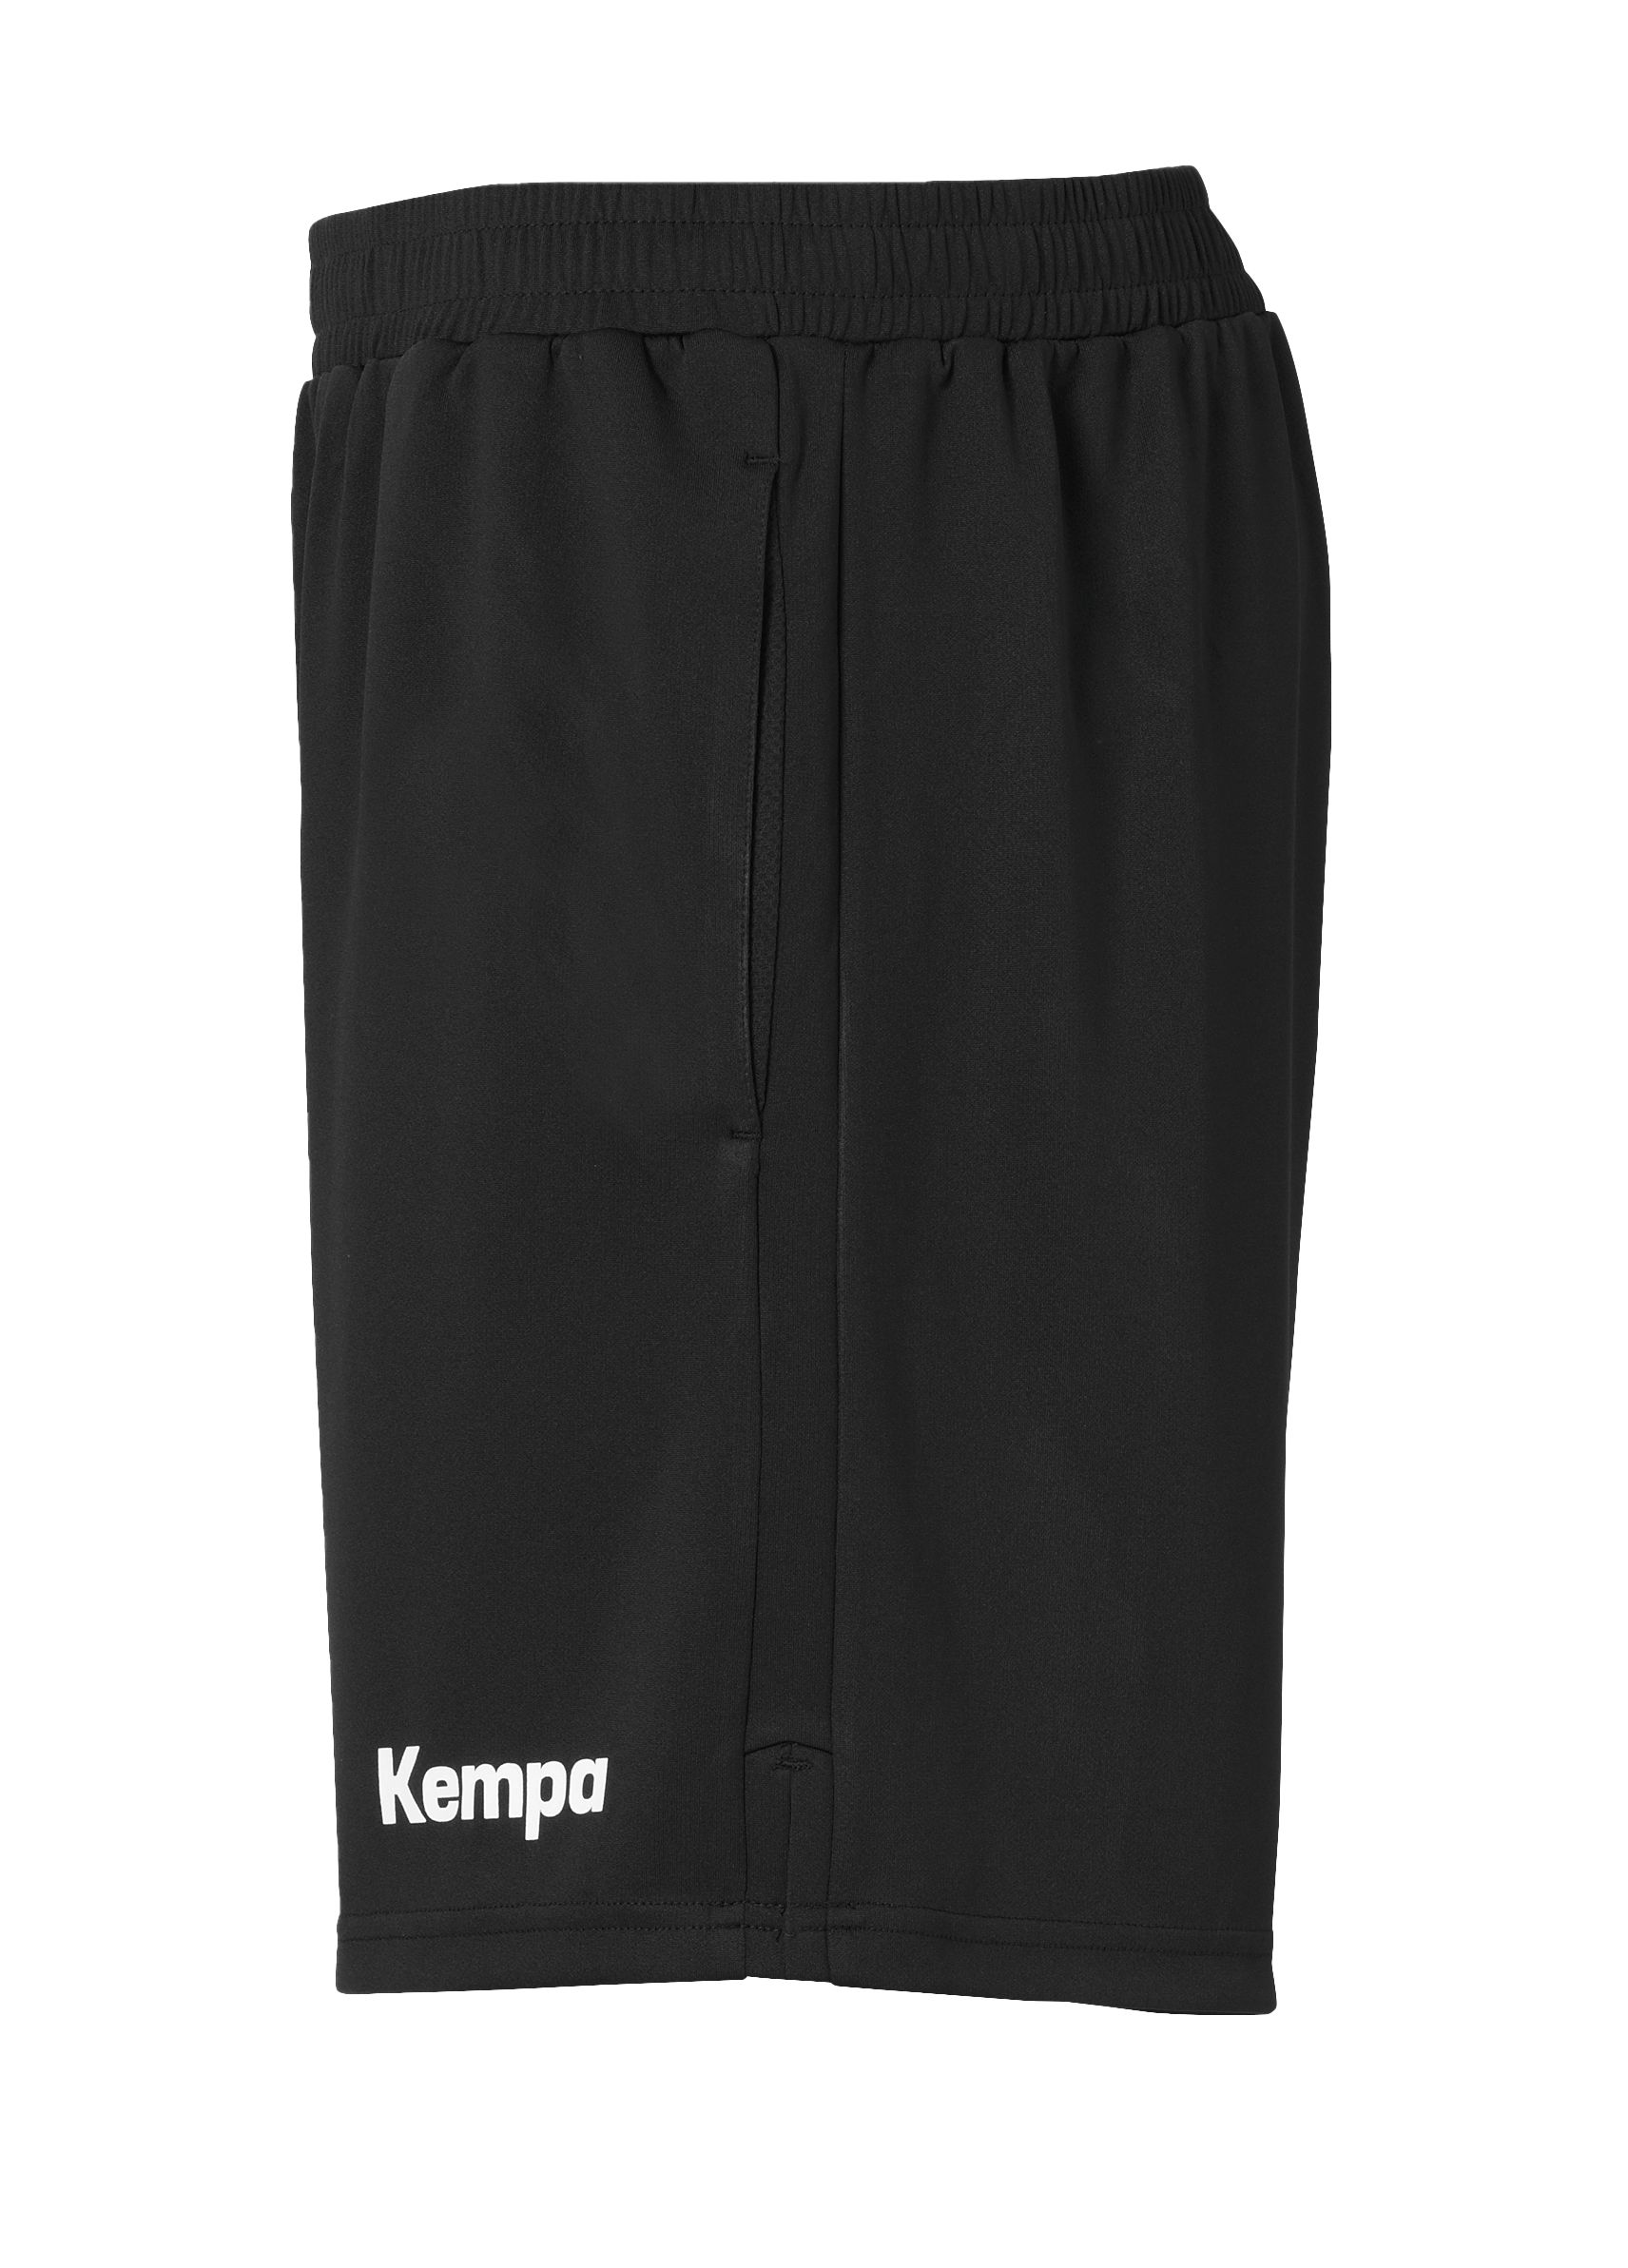 KEMPA, Pocket shorts JR